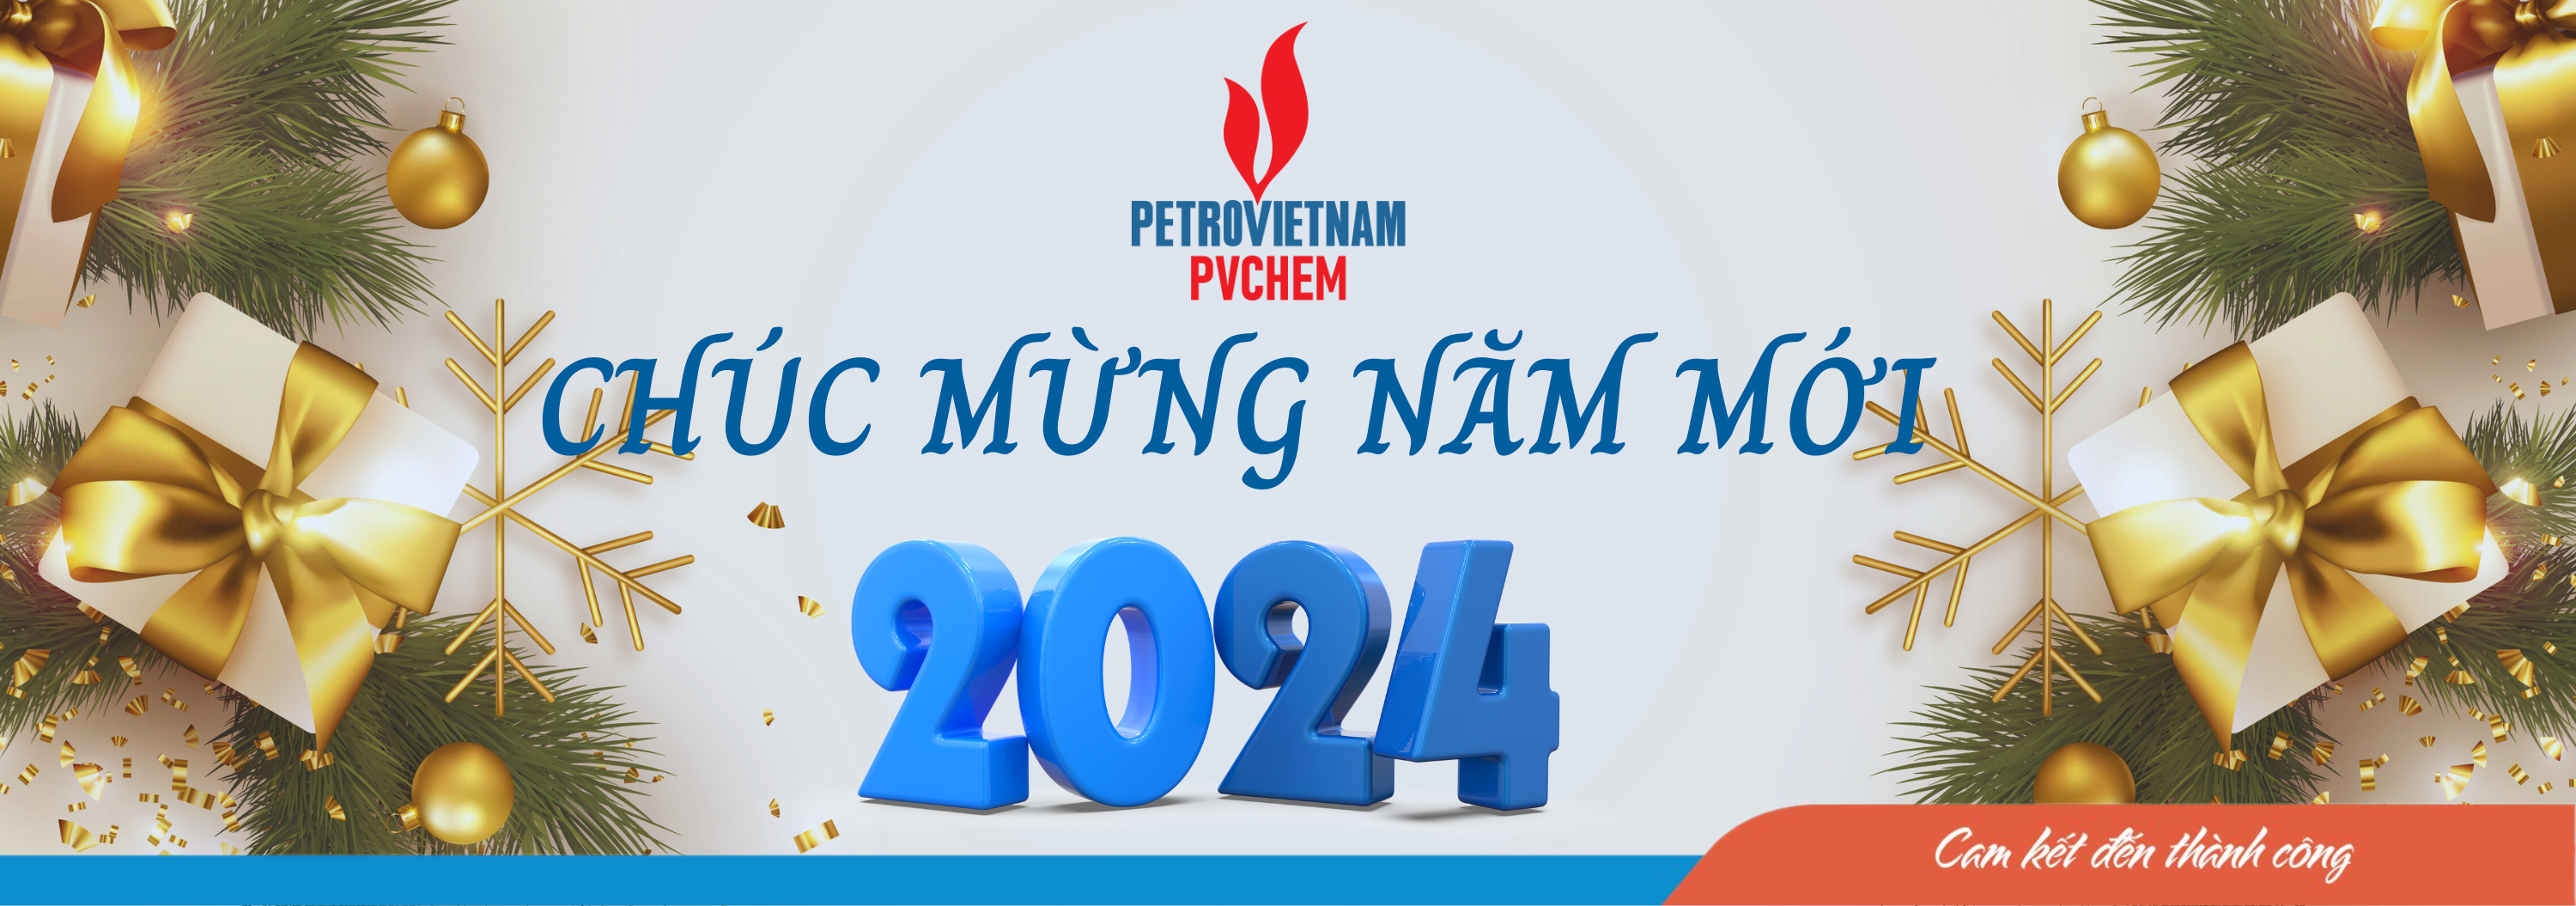 banner chuc mung nam moi 2024